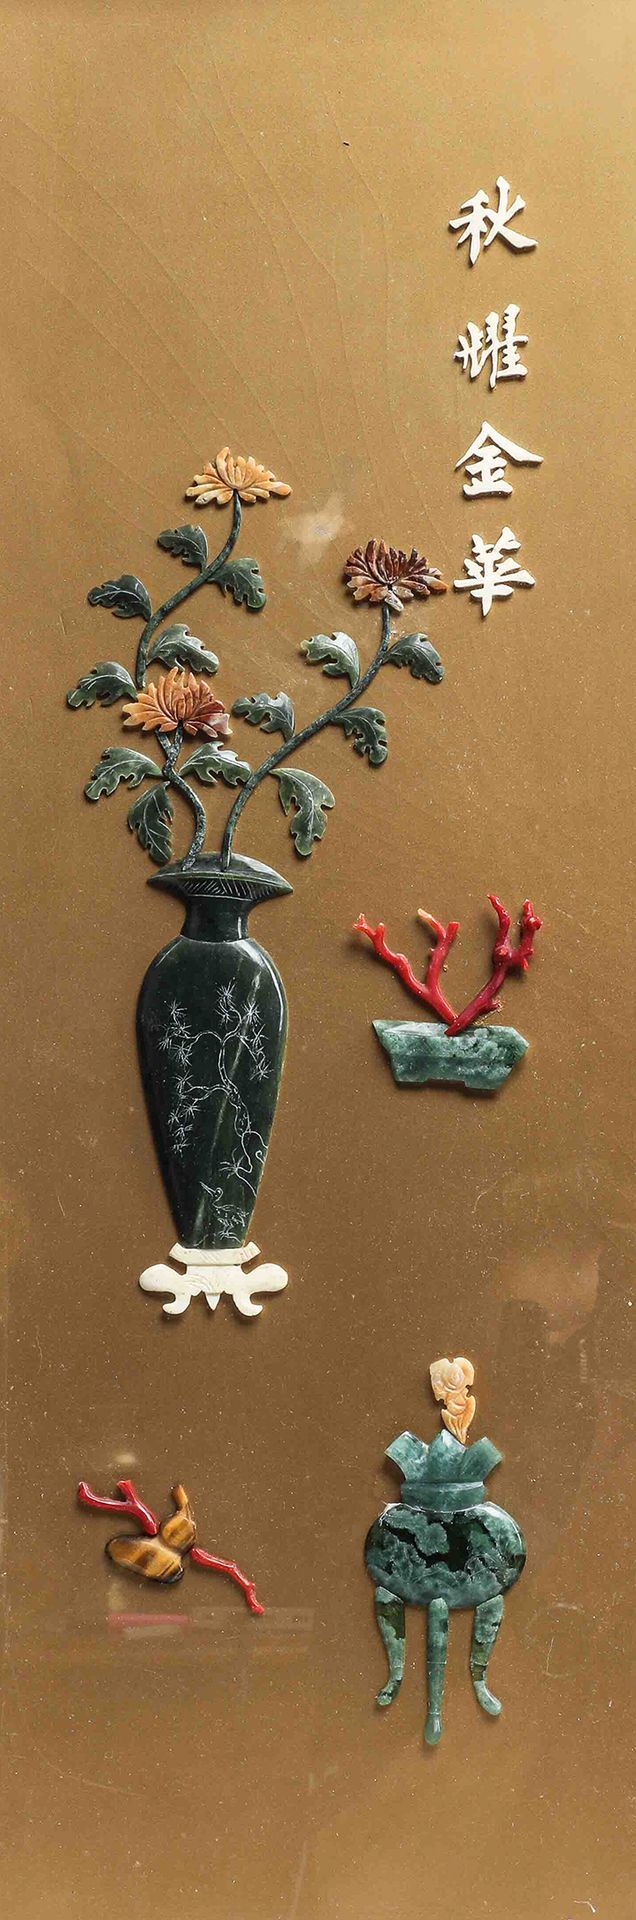 Null 
画有硬石和珊瑚花瓶的雕刻装饰。

中国 20世纪

H.77厘米，长31.5厘米